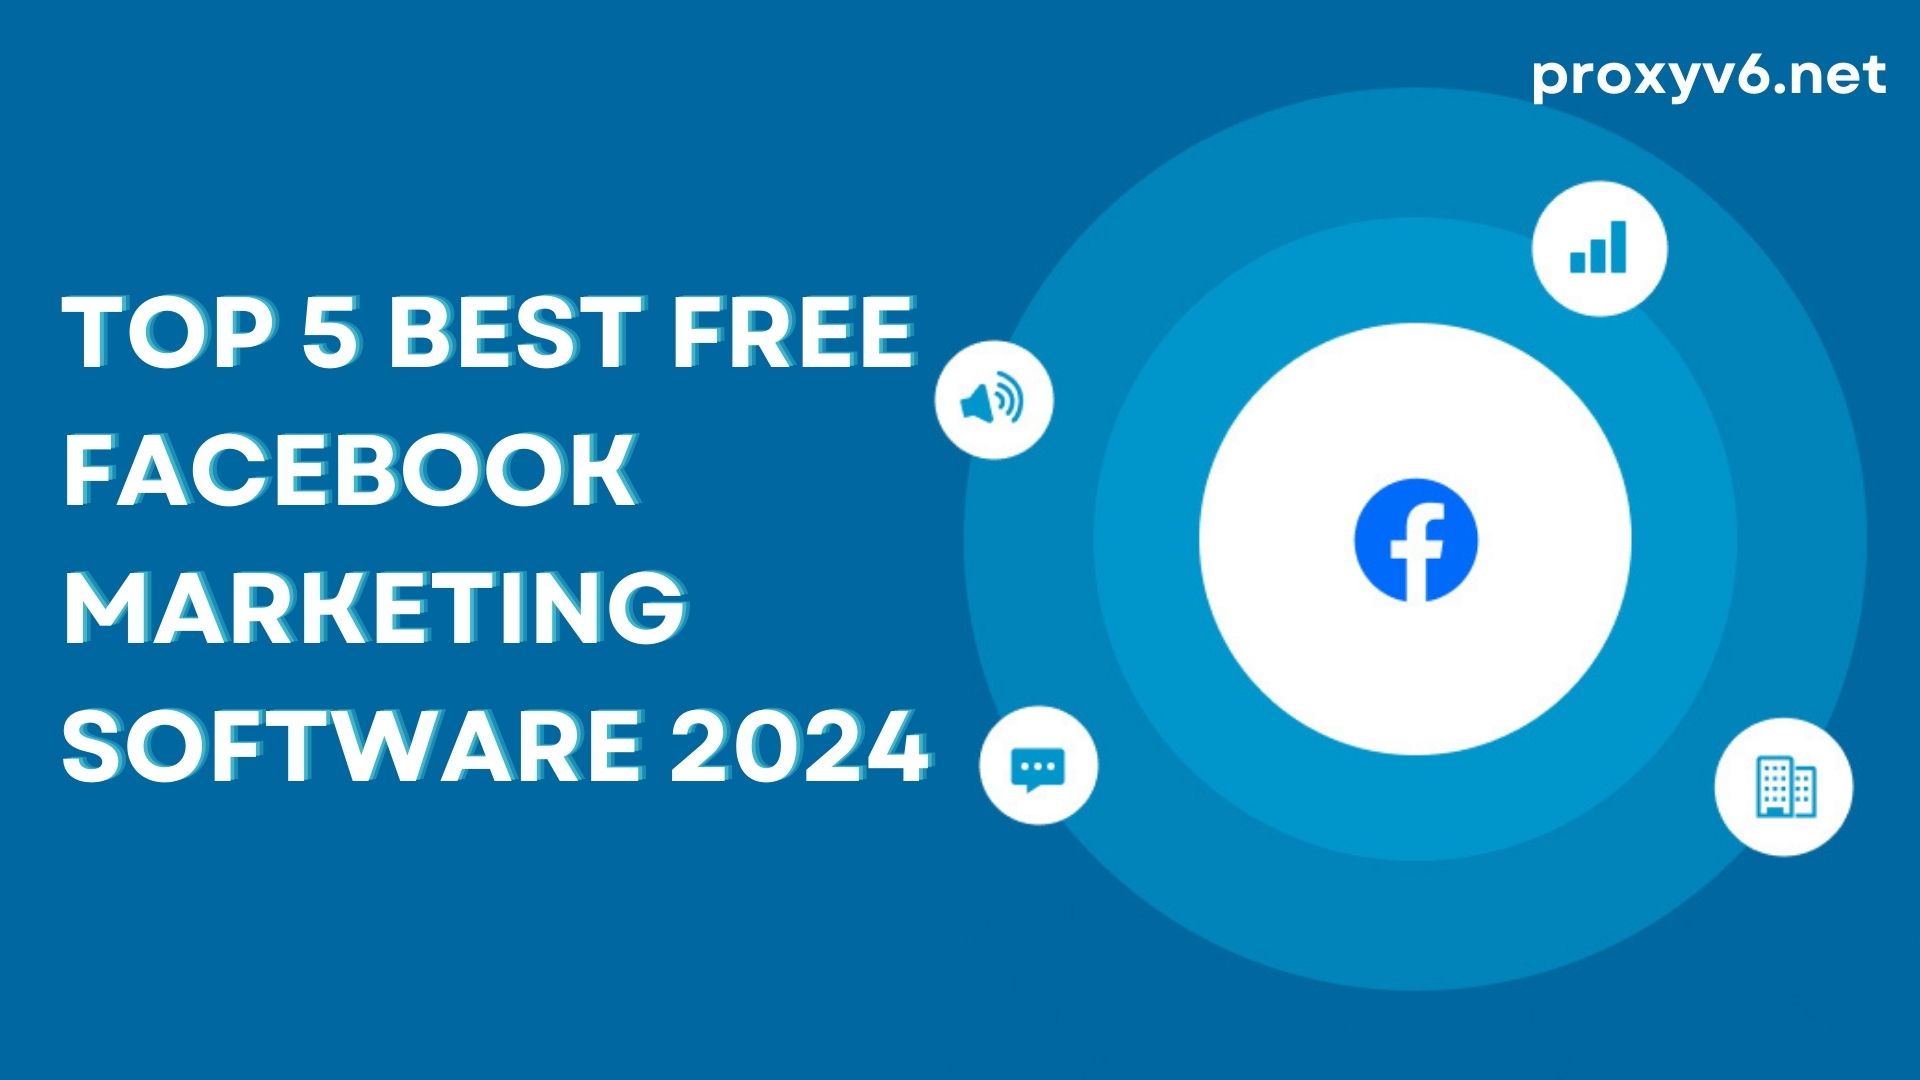 Top 5 best free Facebook marketing software 2024